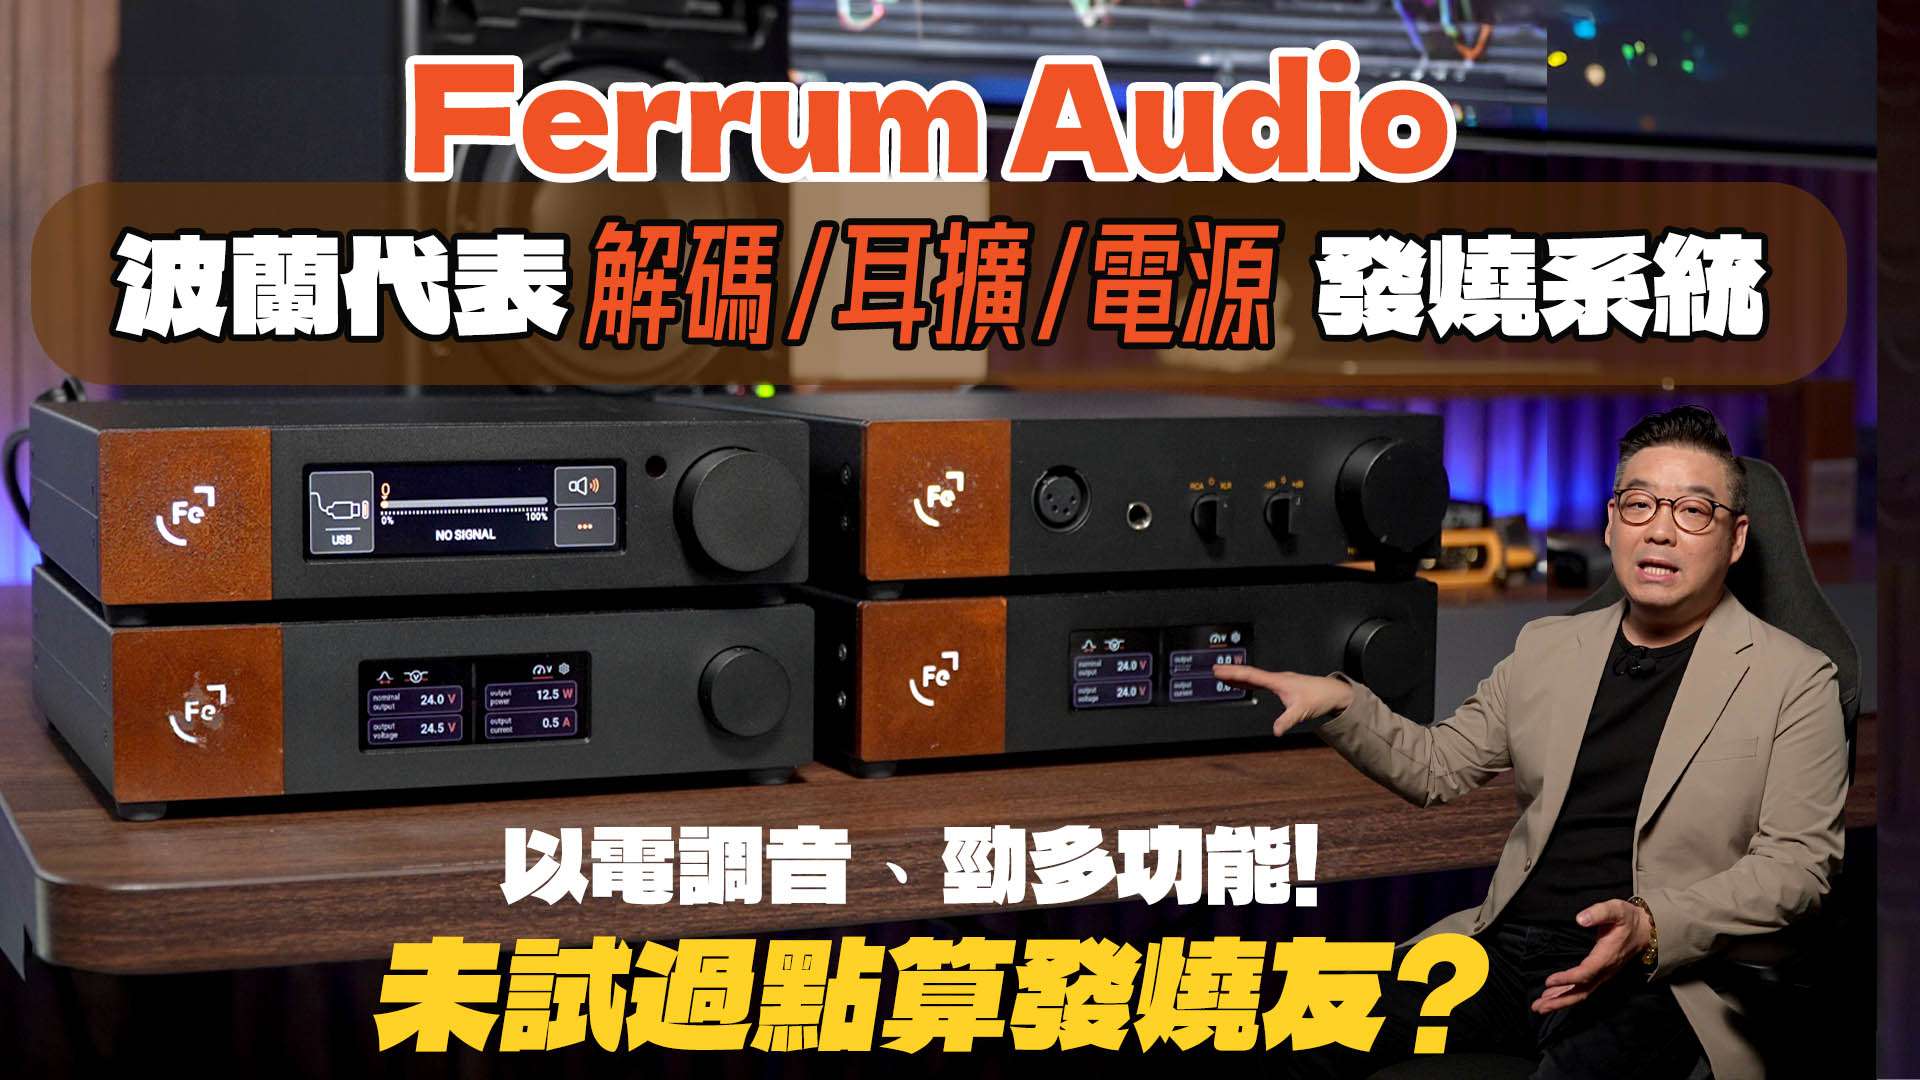 Ferrum Audio desktop system review forum copy.jpg